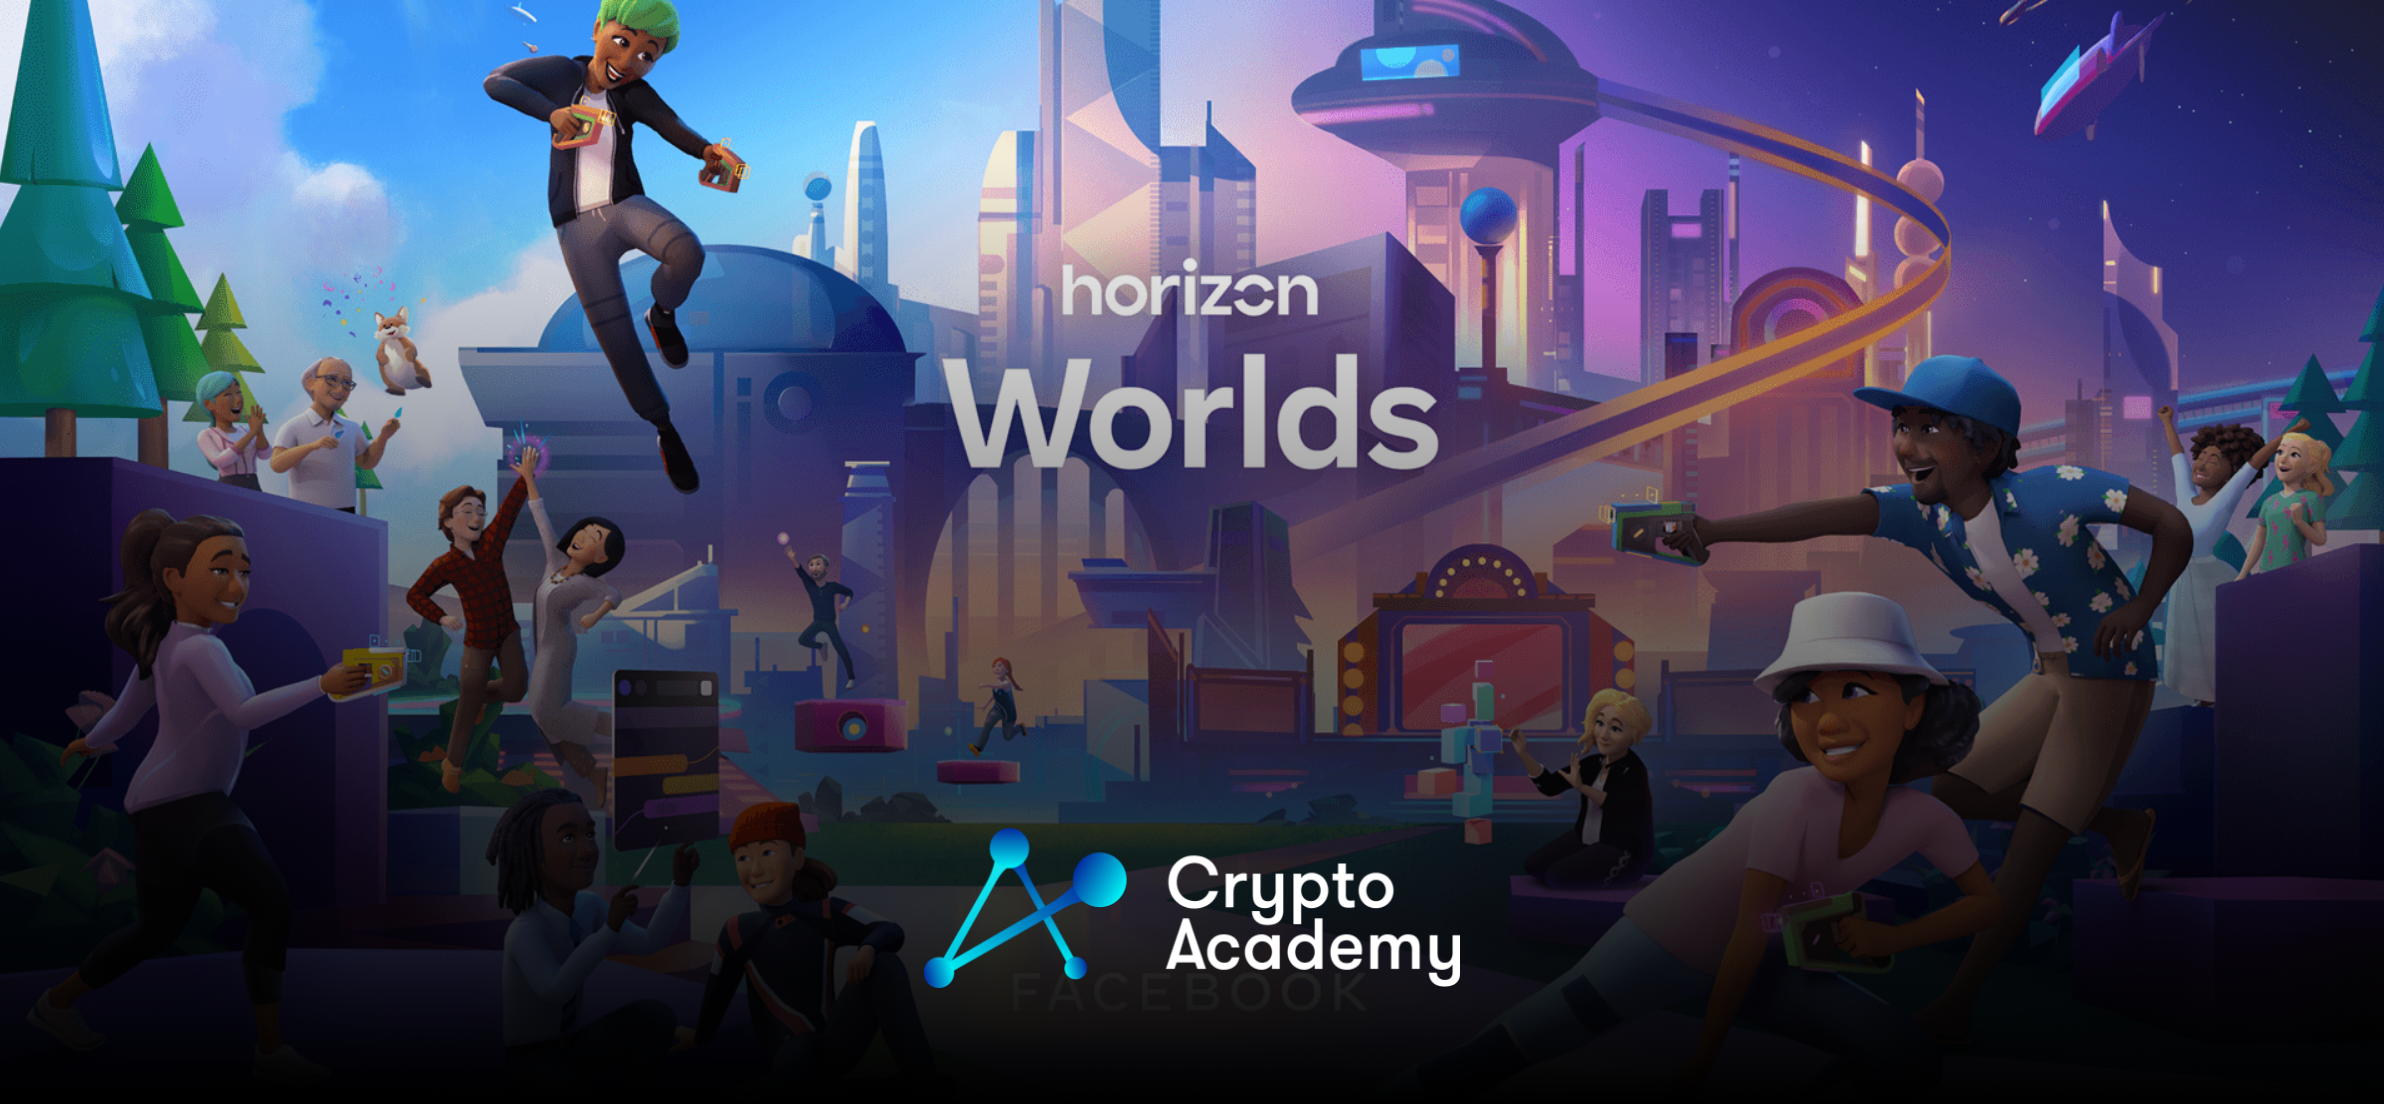 Meta Expands The Horizon Worlds Platform